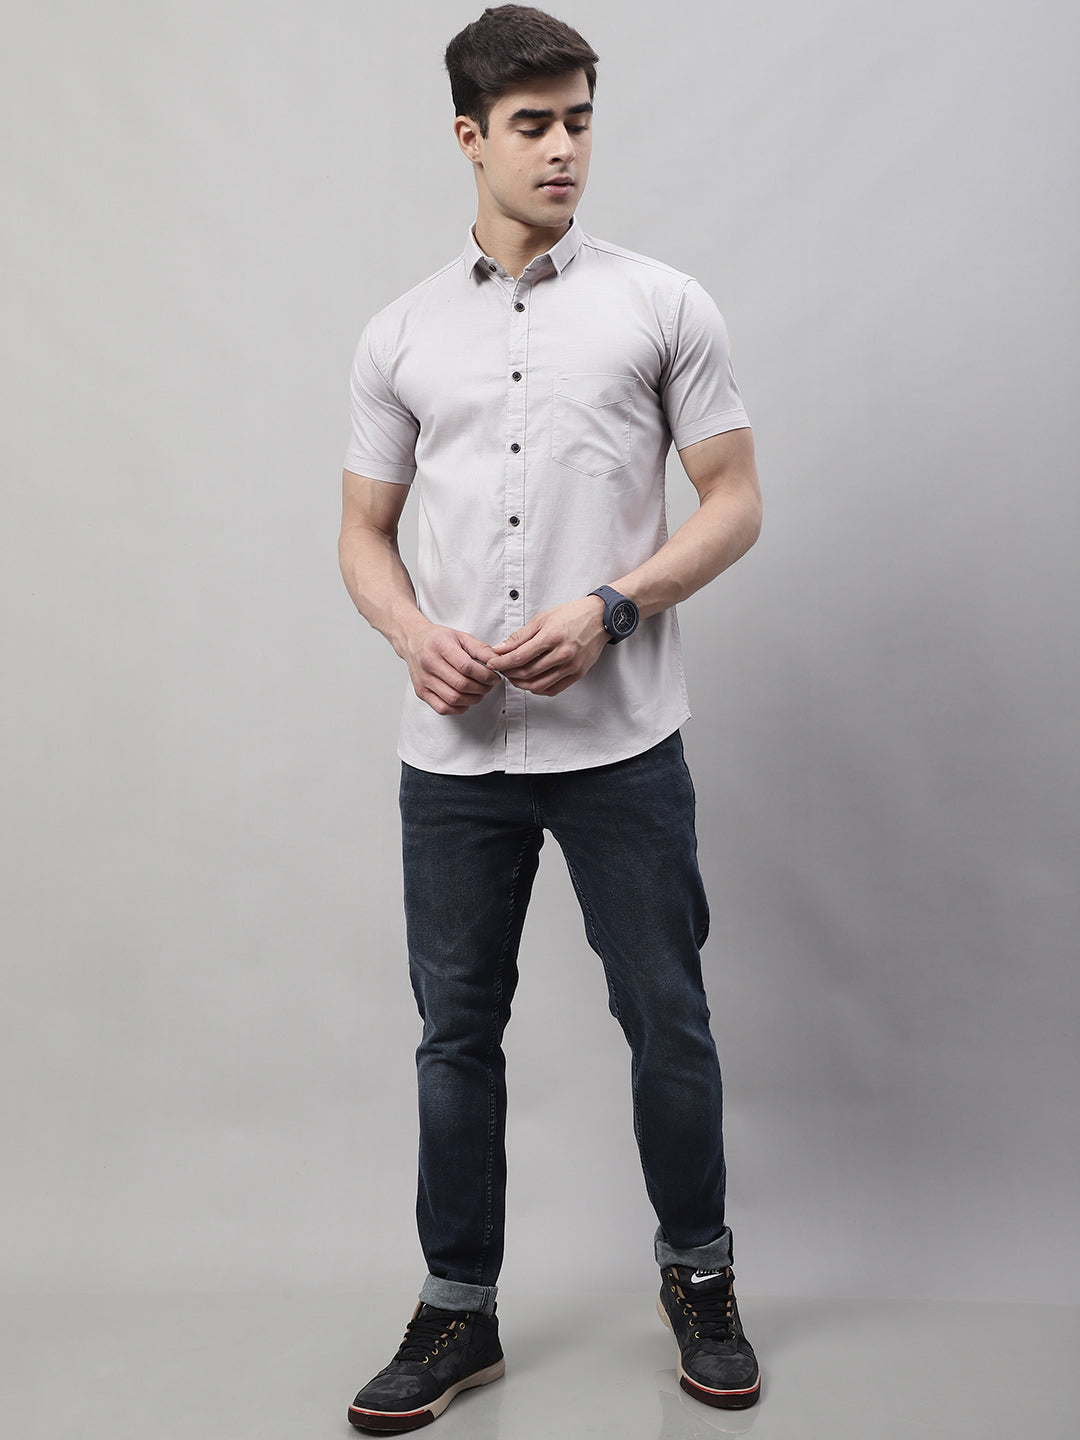 Unique and Fashionable Pure Cotton Half shirt - Light Grey